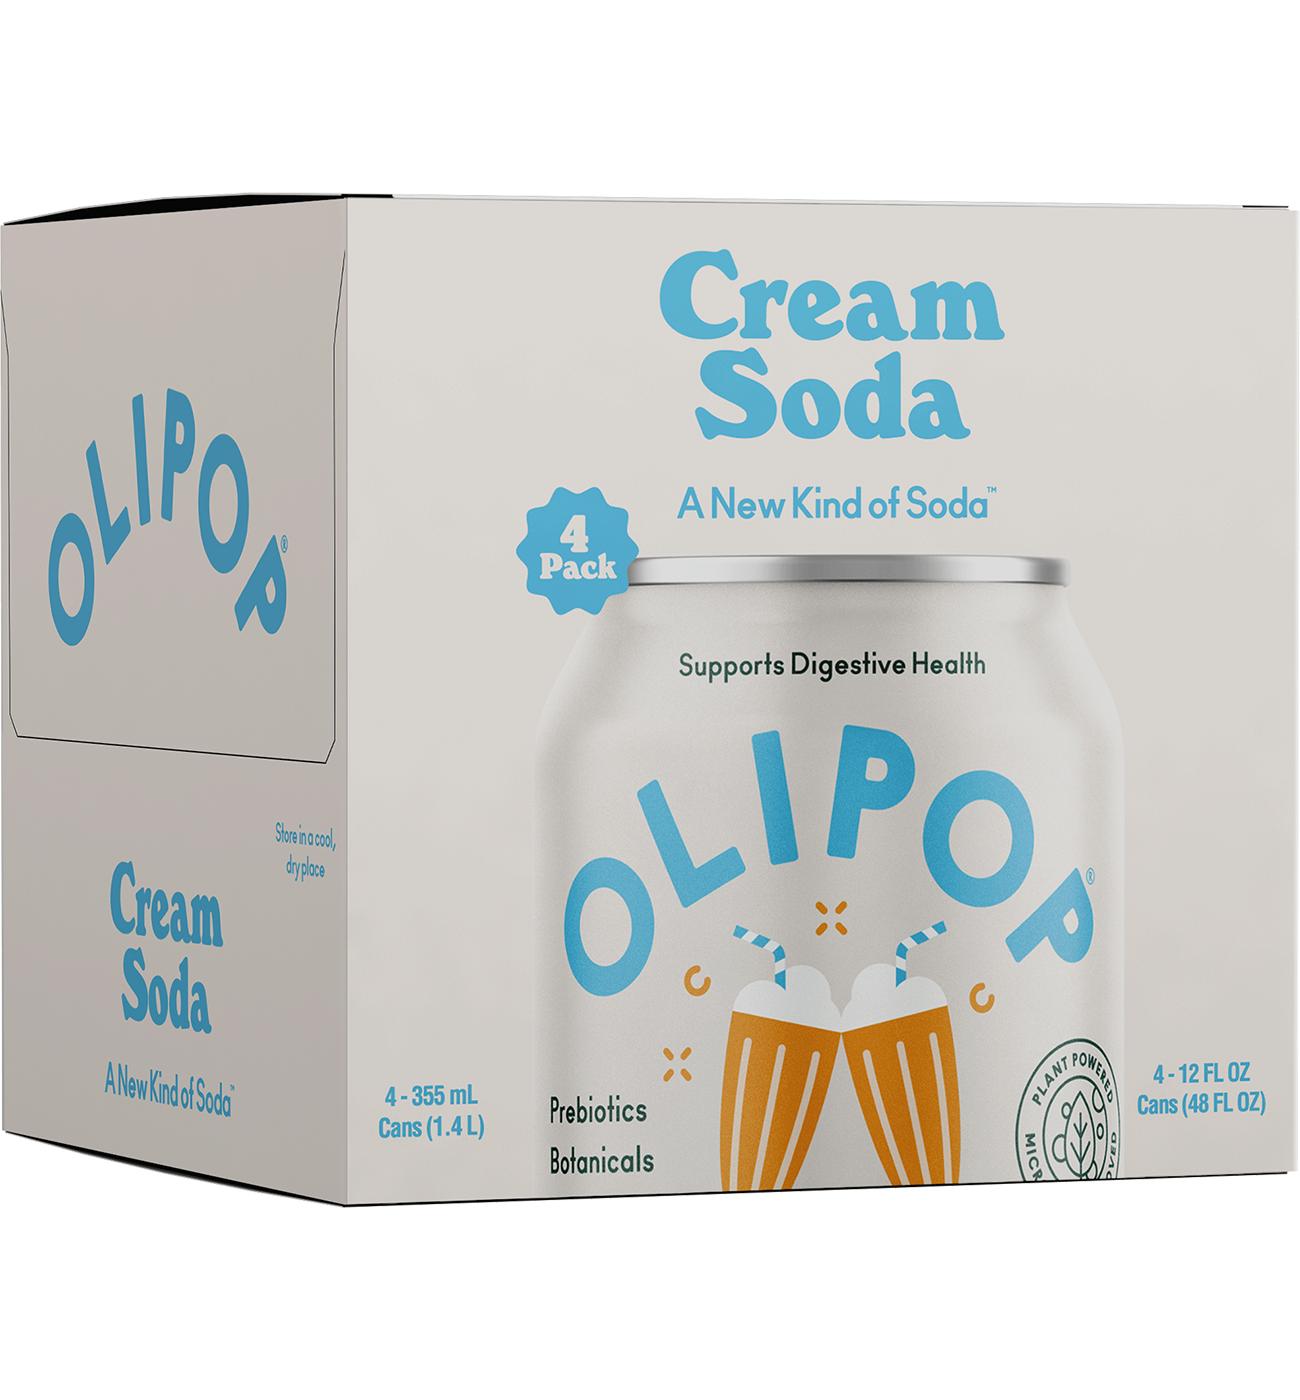 Olipop Prebiotic Cream Soda 4 pk Cans ; image 1 of 2